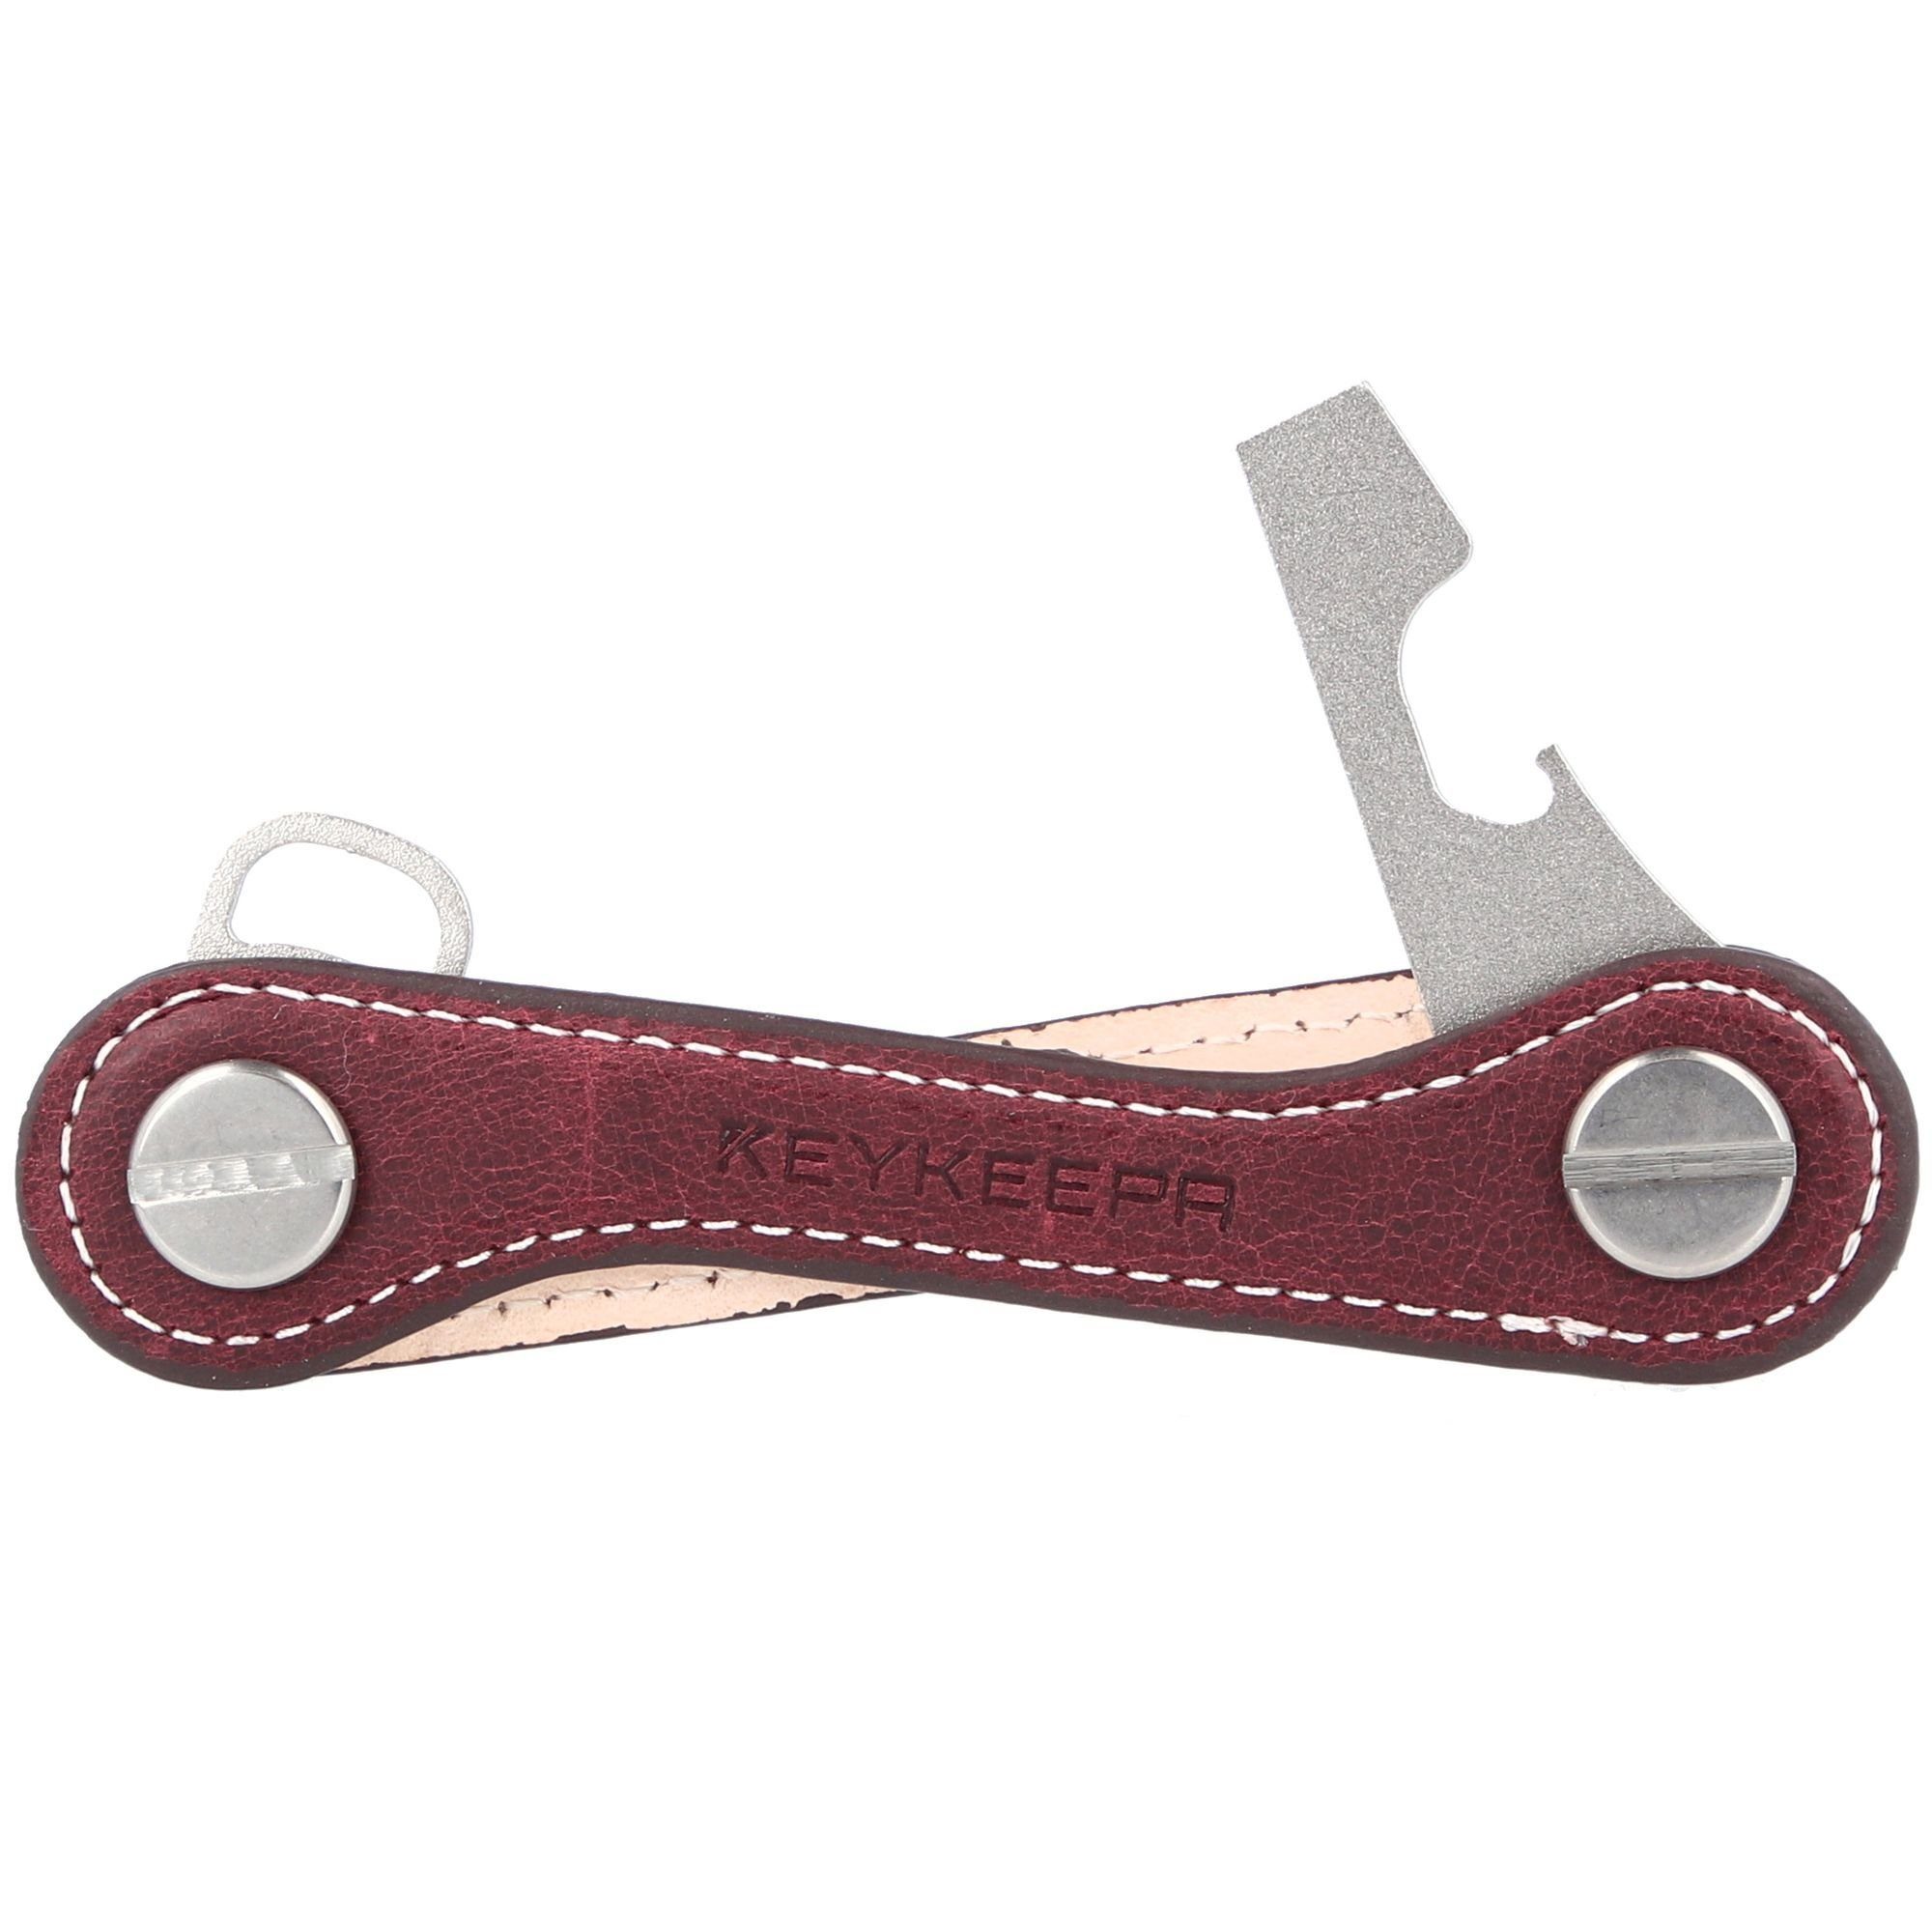 Keykeepa Schlüsseltasche Leather, Leder merlot red